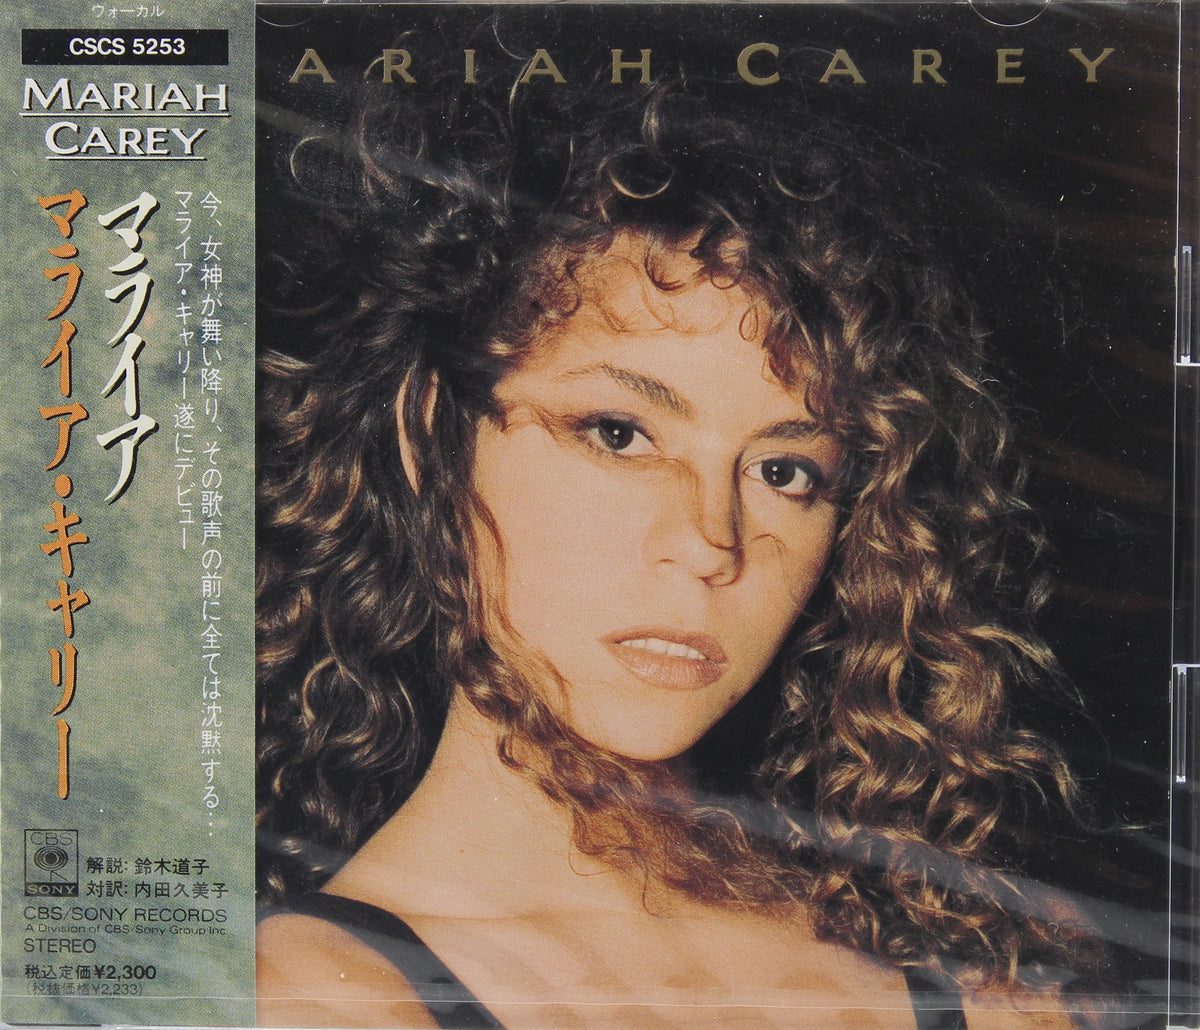 Mariah Carey ‎– Mariah Carey, CD, Japan 1990